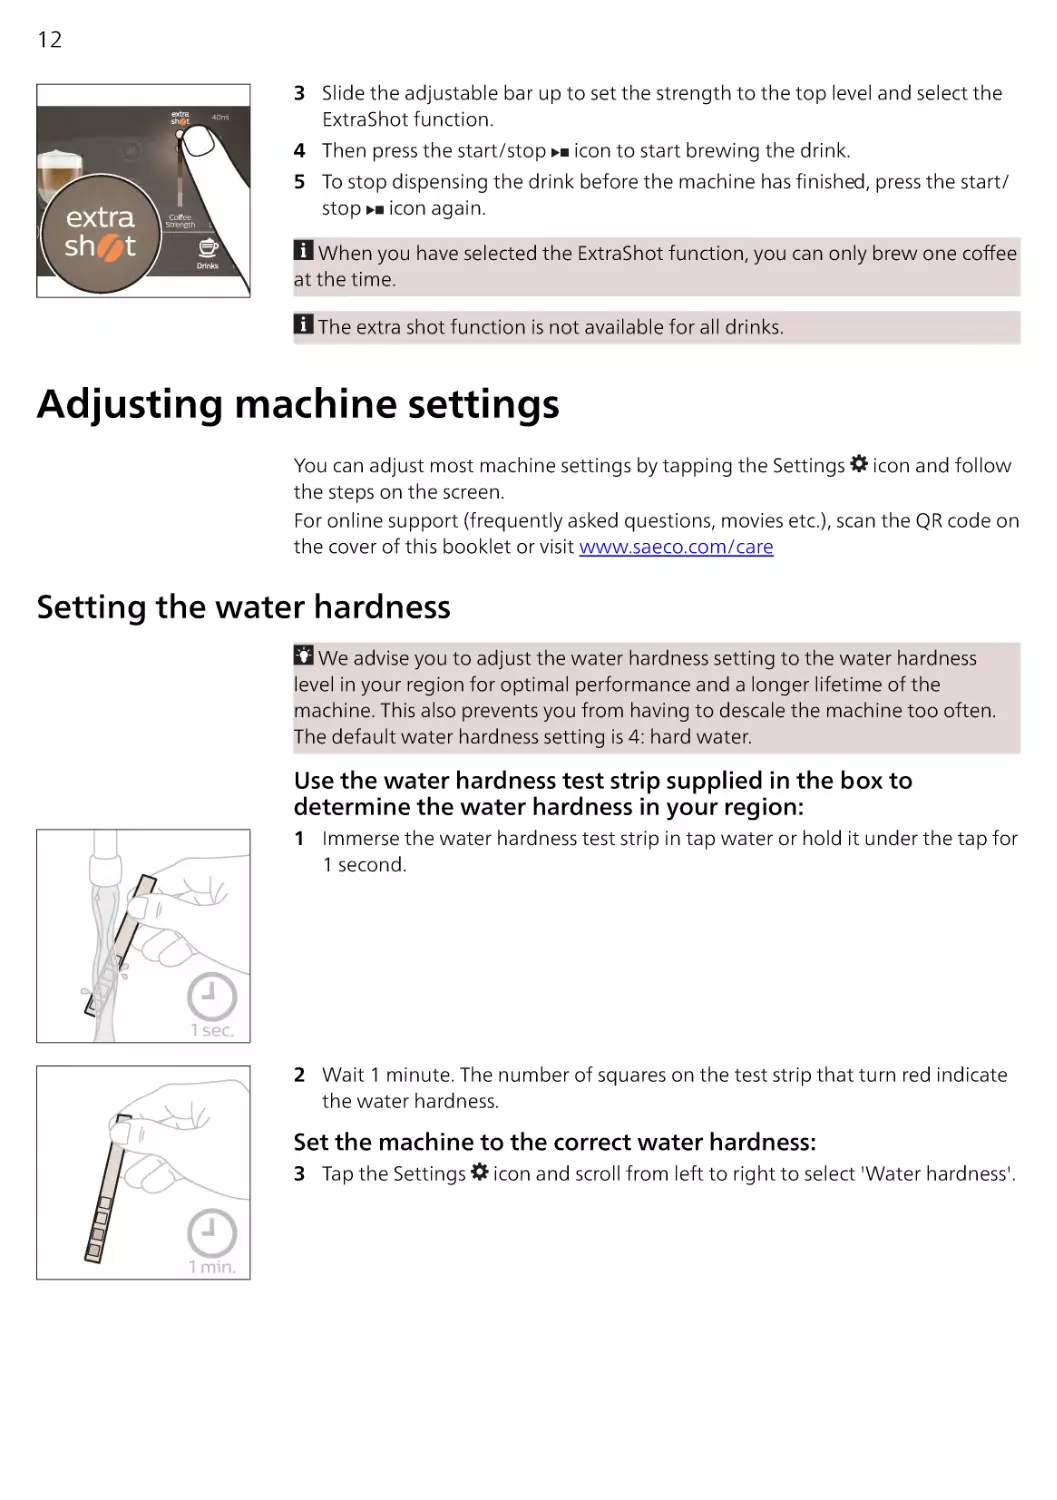 Adjusting machine settings
Setting the water hardness